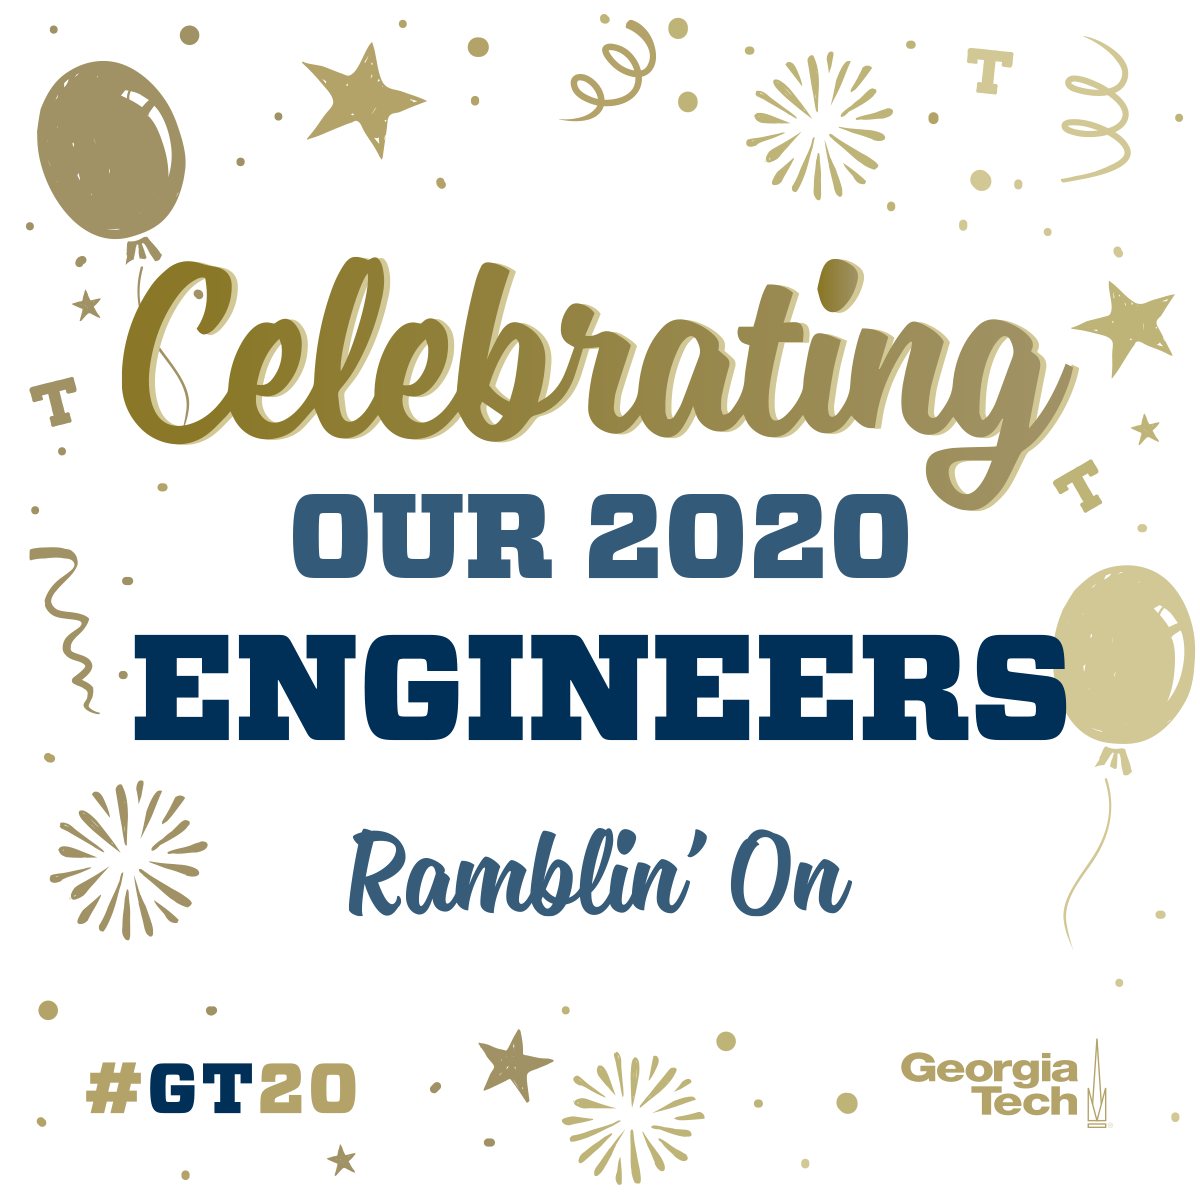 Celebrating our 2020 Engineers - Ramblin' On - #GT20 - Georgia Tech